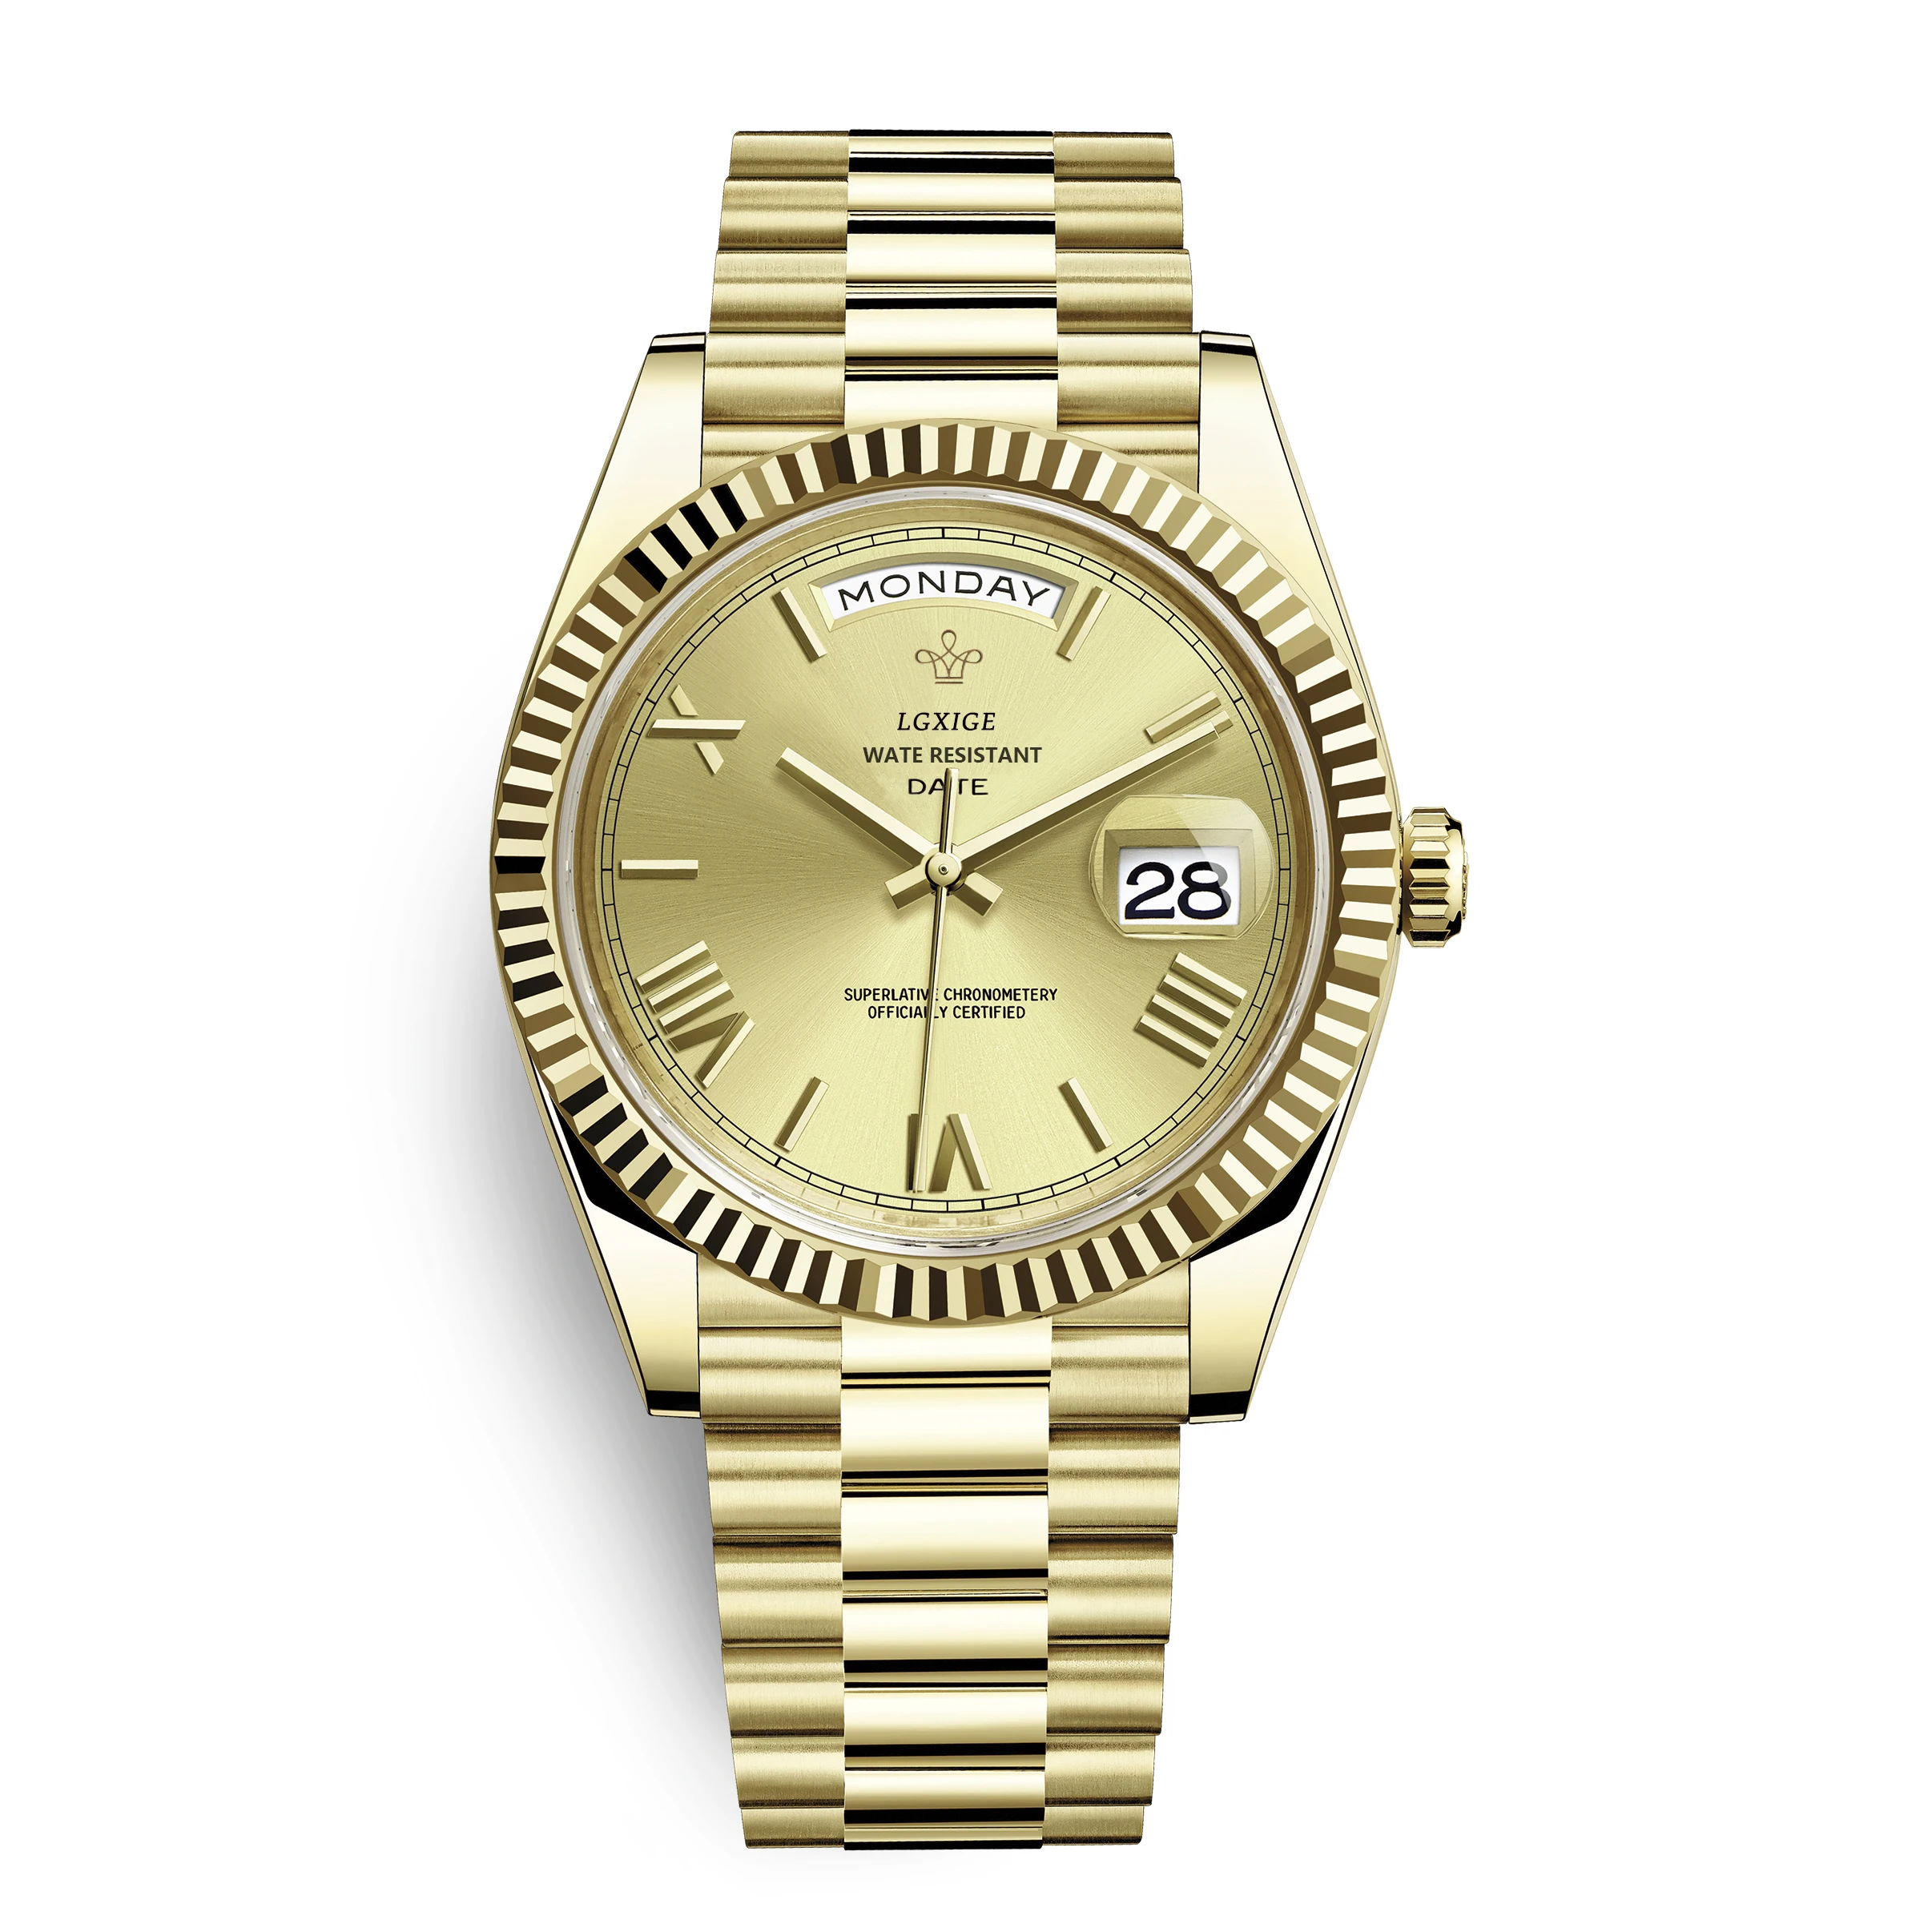 2022 New Fashion Tiffany Blue Watch Men Day Date Waterproof Wrist Watch For Men Top Brand Luxury aaa Miyota Quartz Casual Clock -S2f472417752542f0adcd24ecdd10a05d3